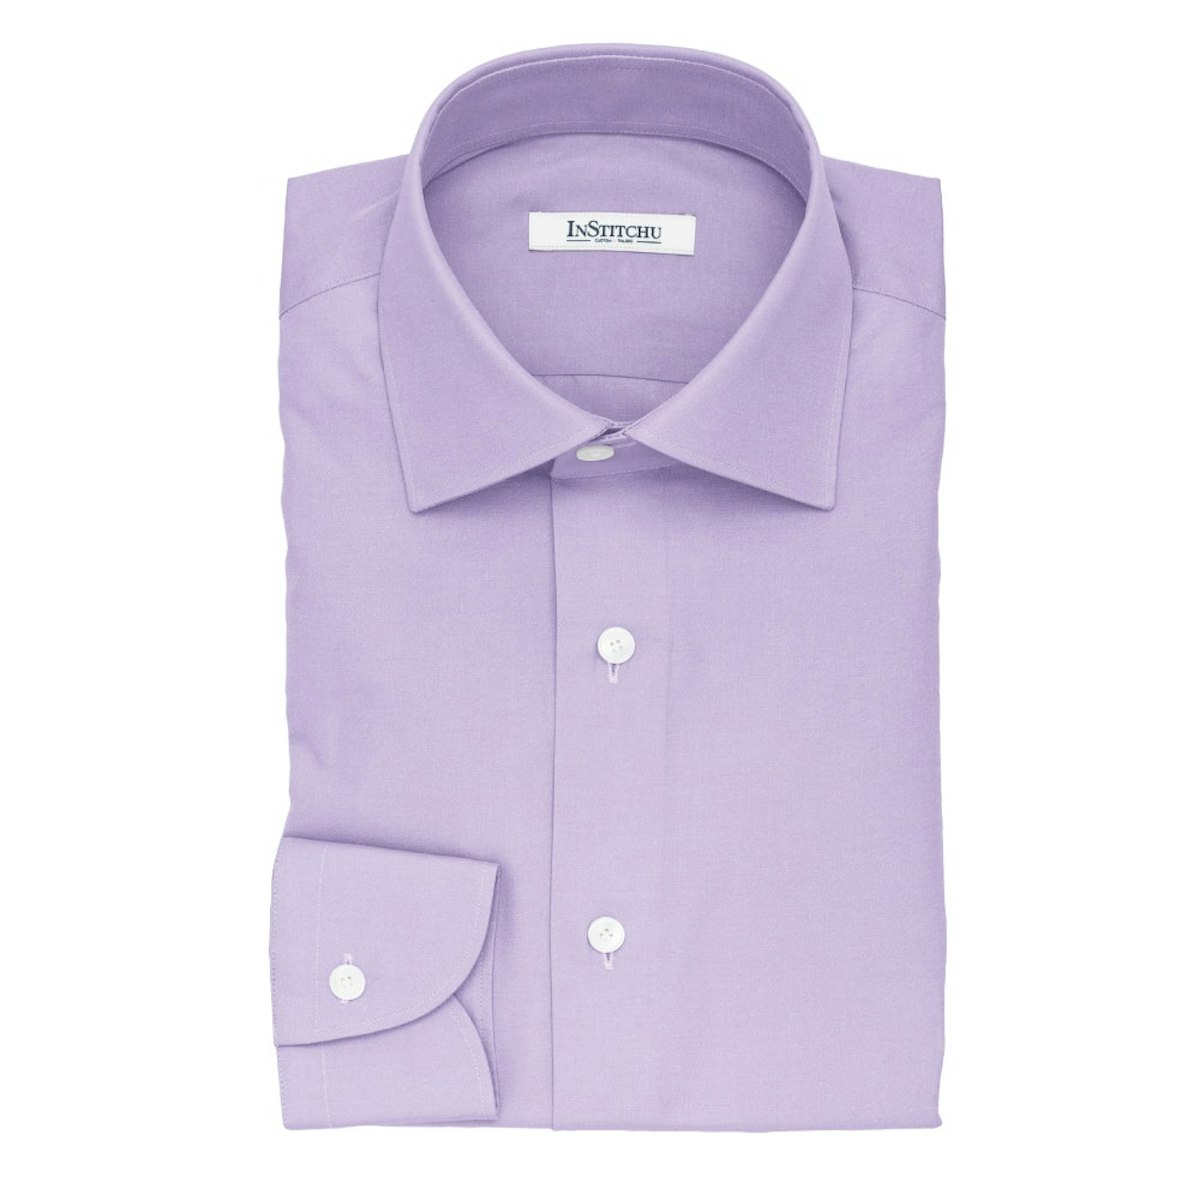 InStitchu Collection The Lugano Lilac Cotton Shirt